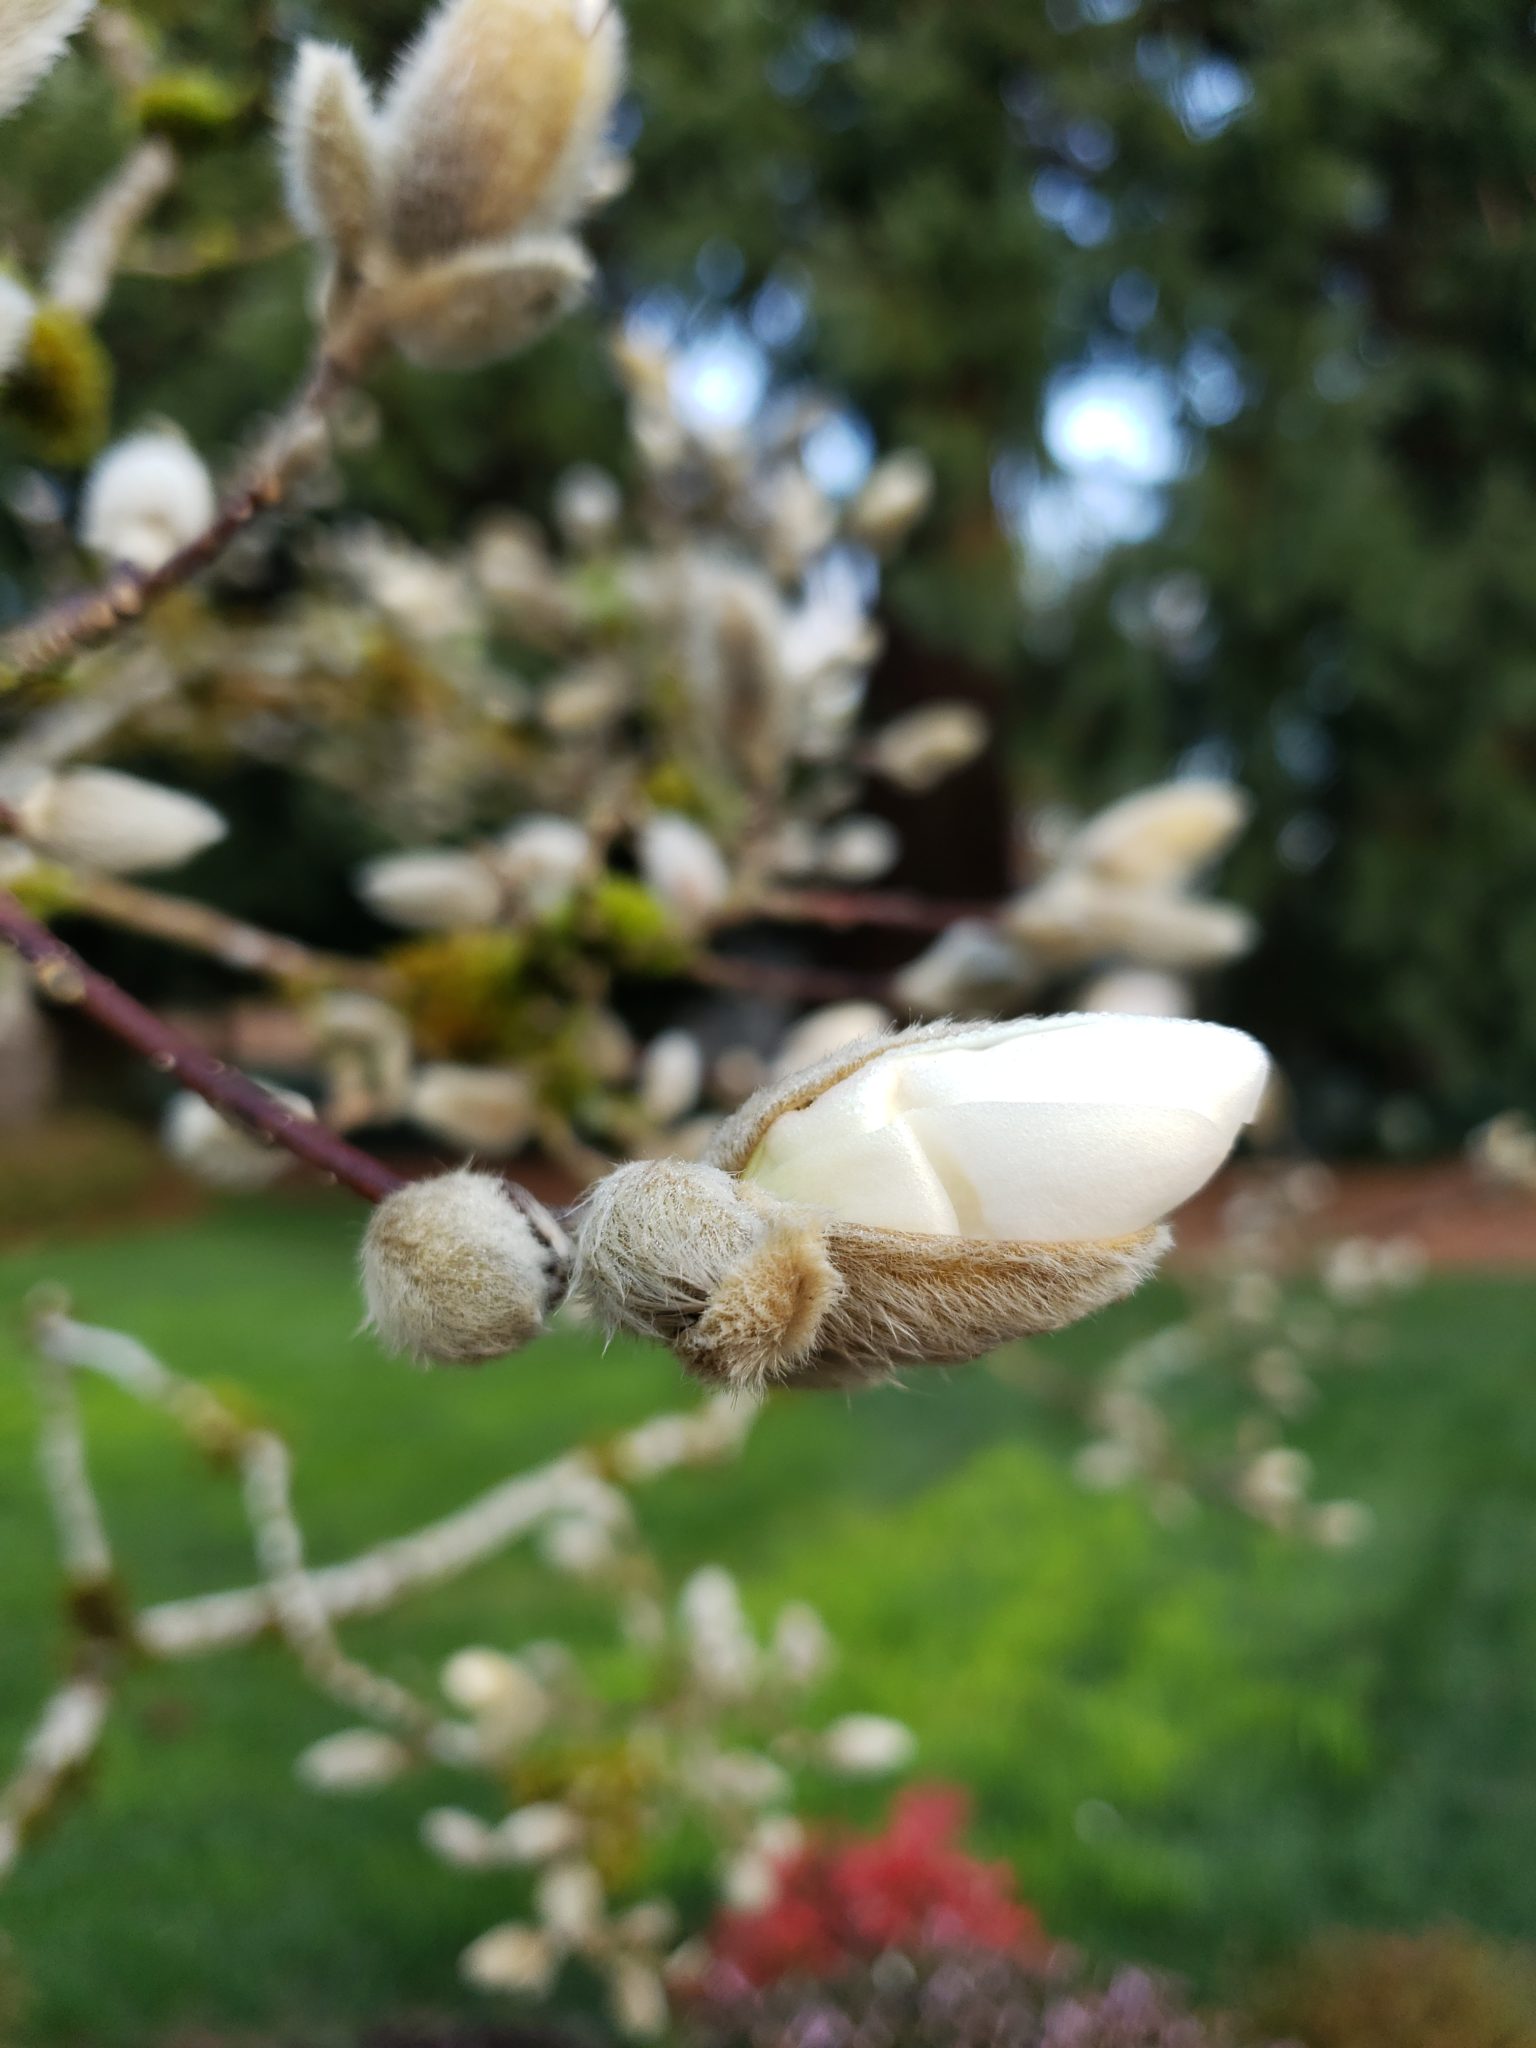 Star magnolia flower bud opening